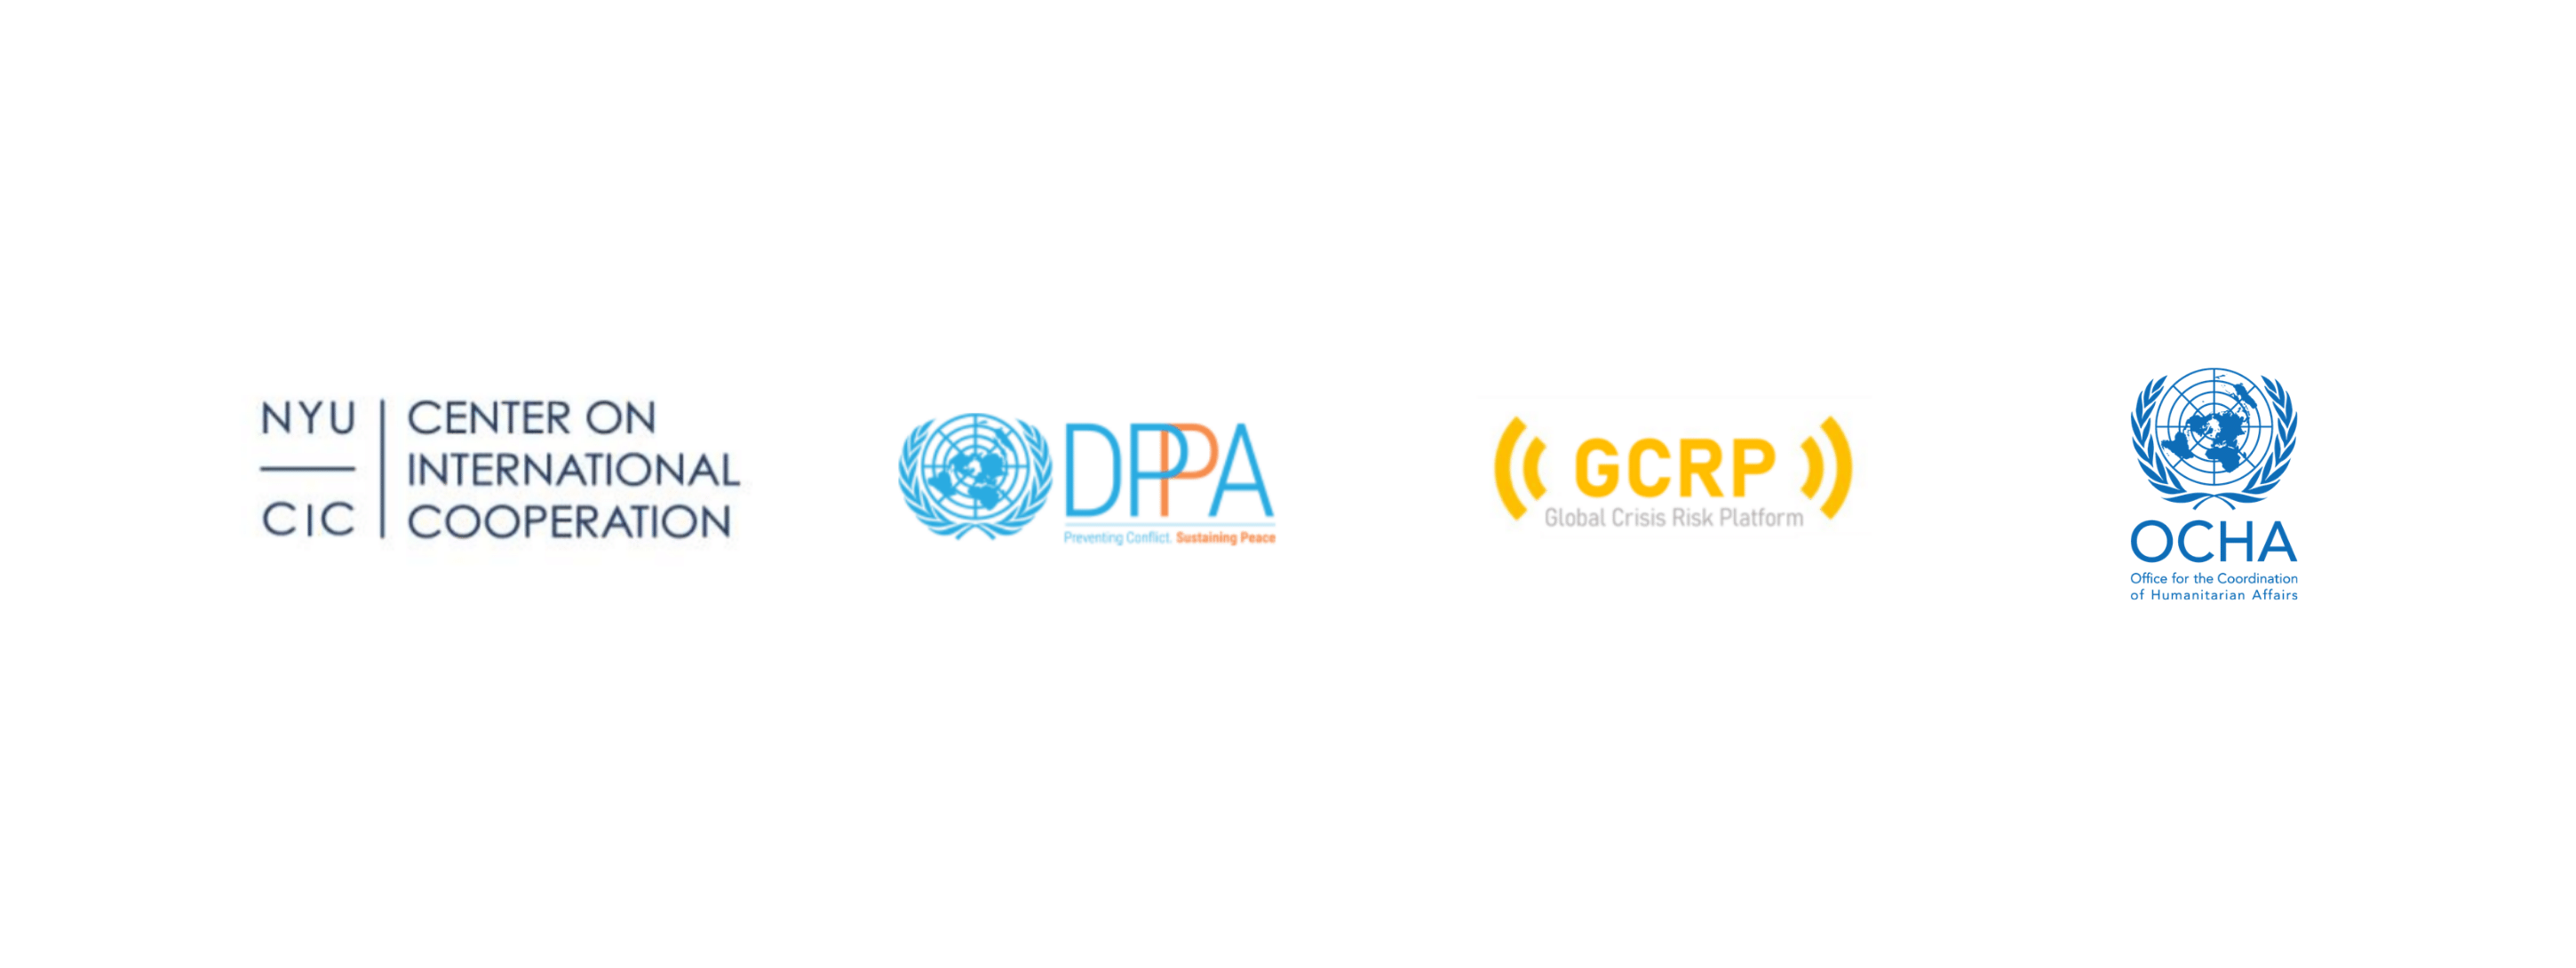 Logos for CIC, DPPA, GCRP, and OCHA